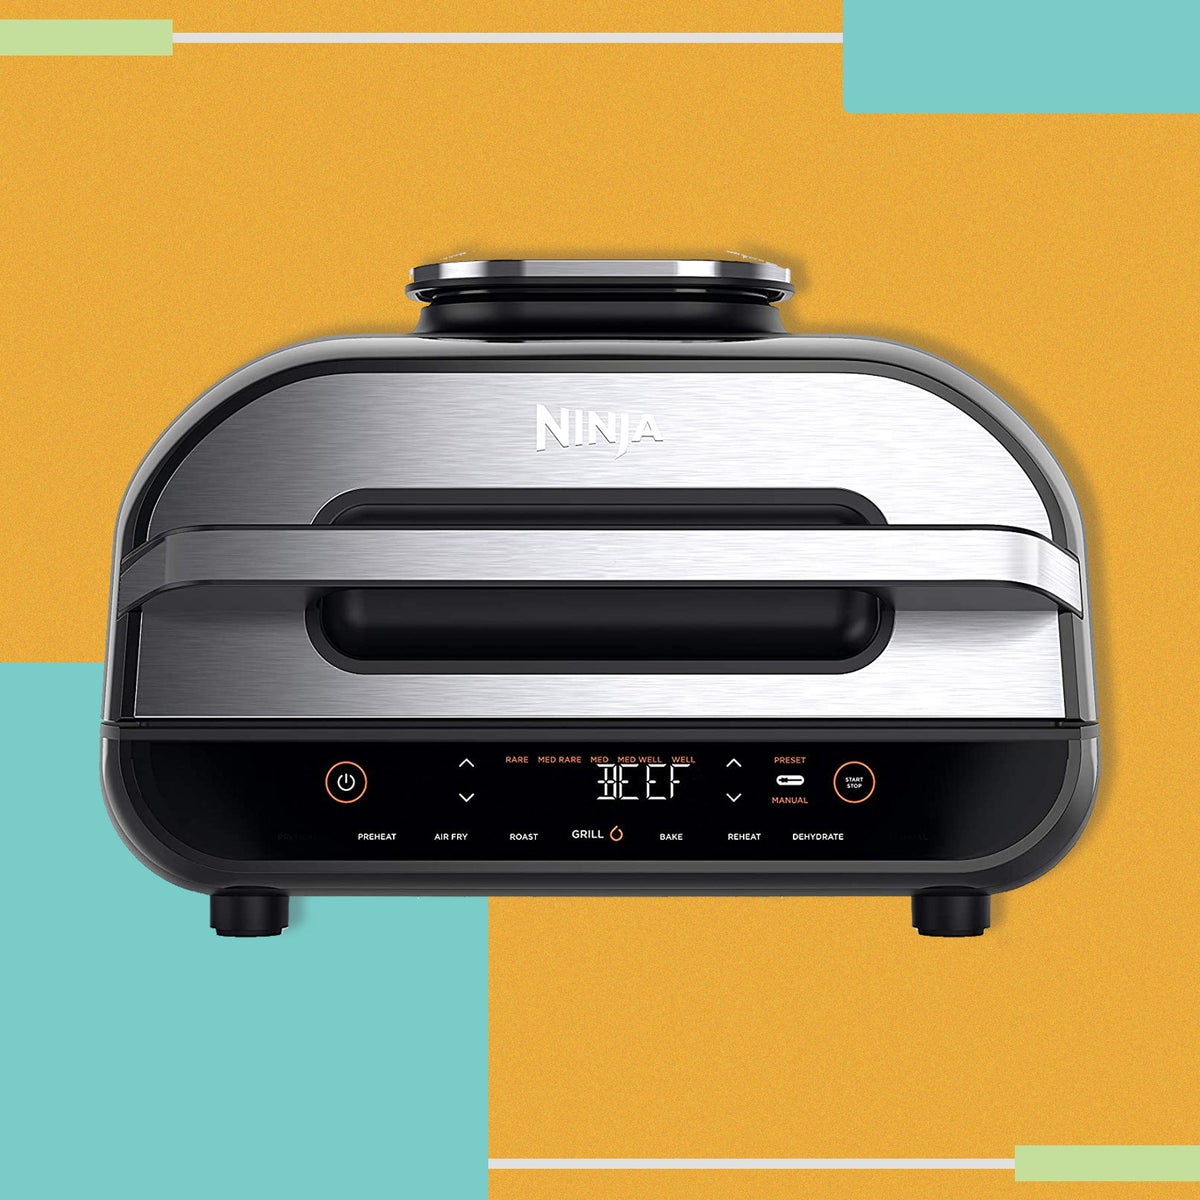 Ninja foodi max health grill and air fryer AG551UK review